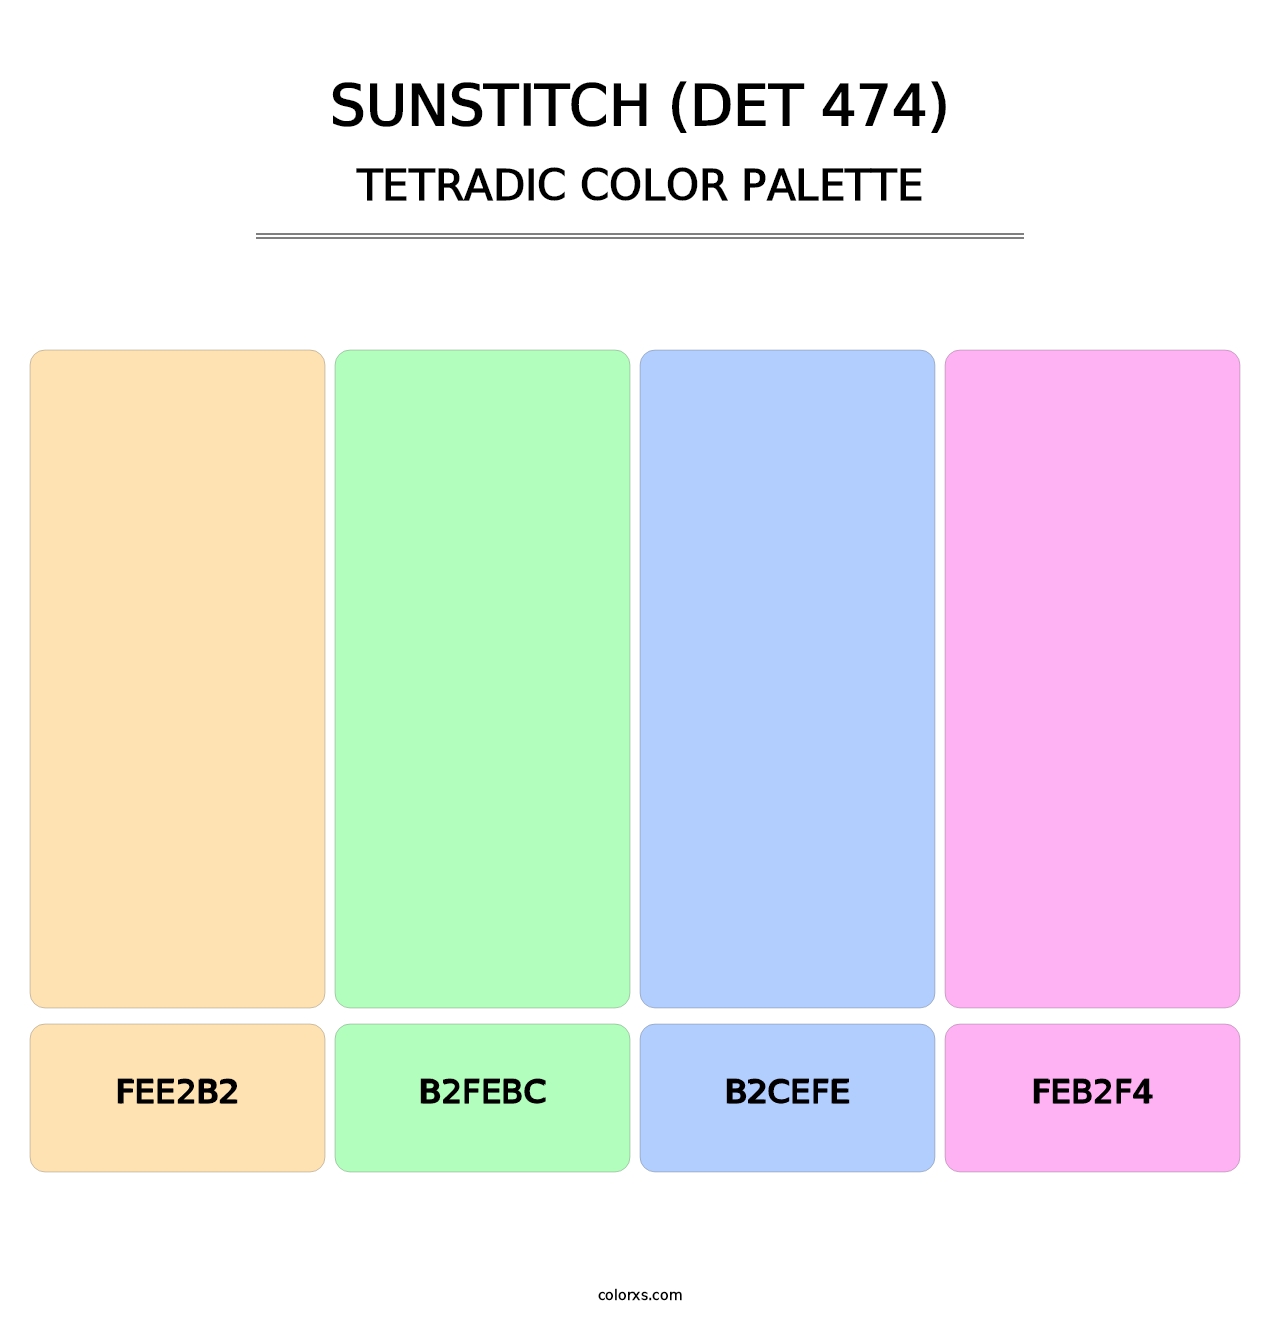 Sunstitch (DET 474) - Tetradic Color Palette